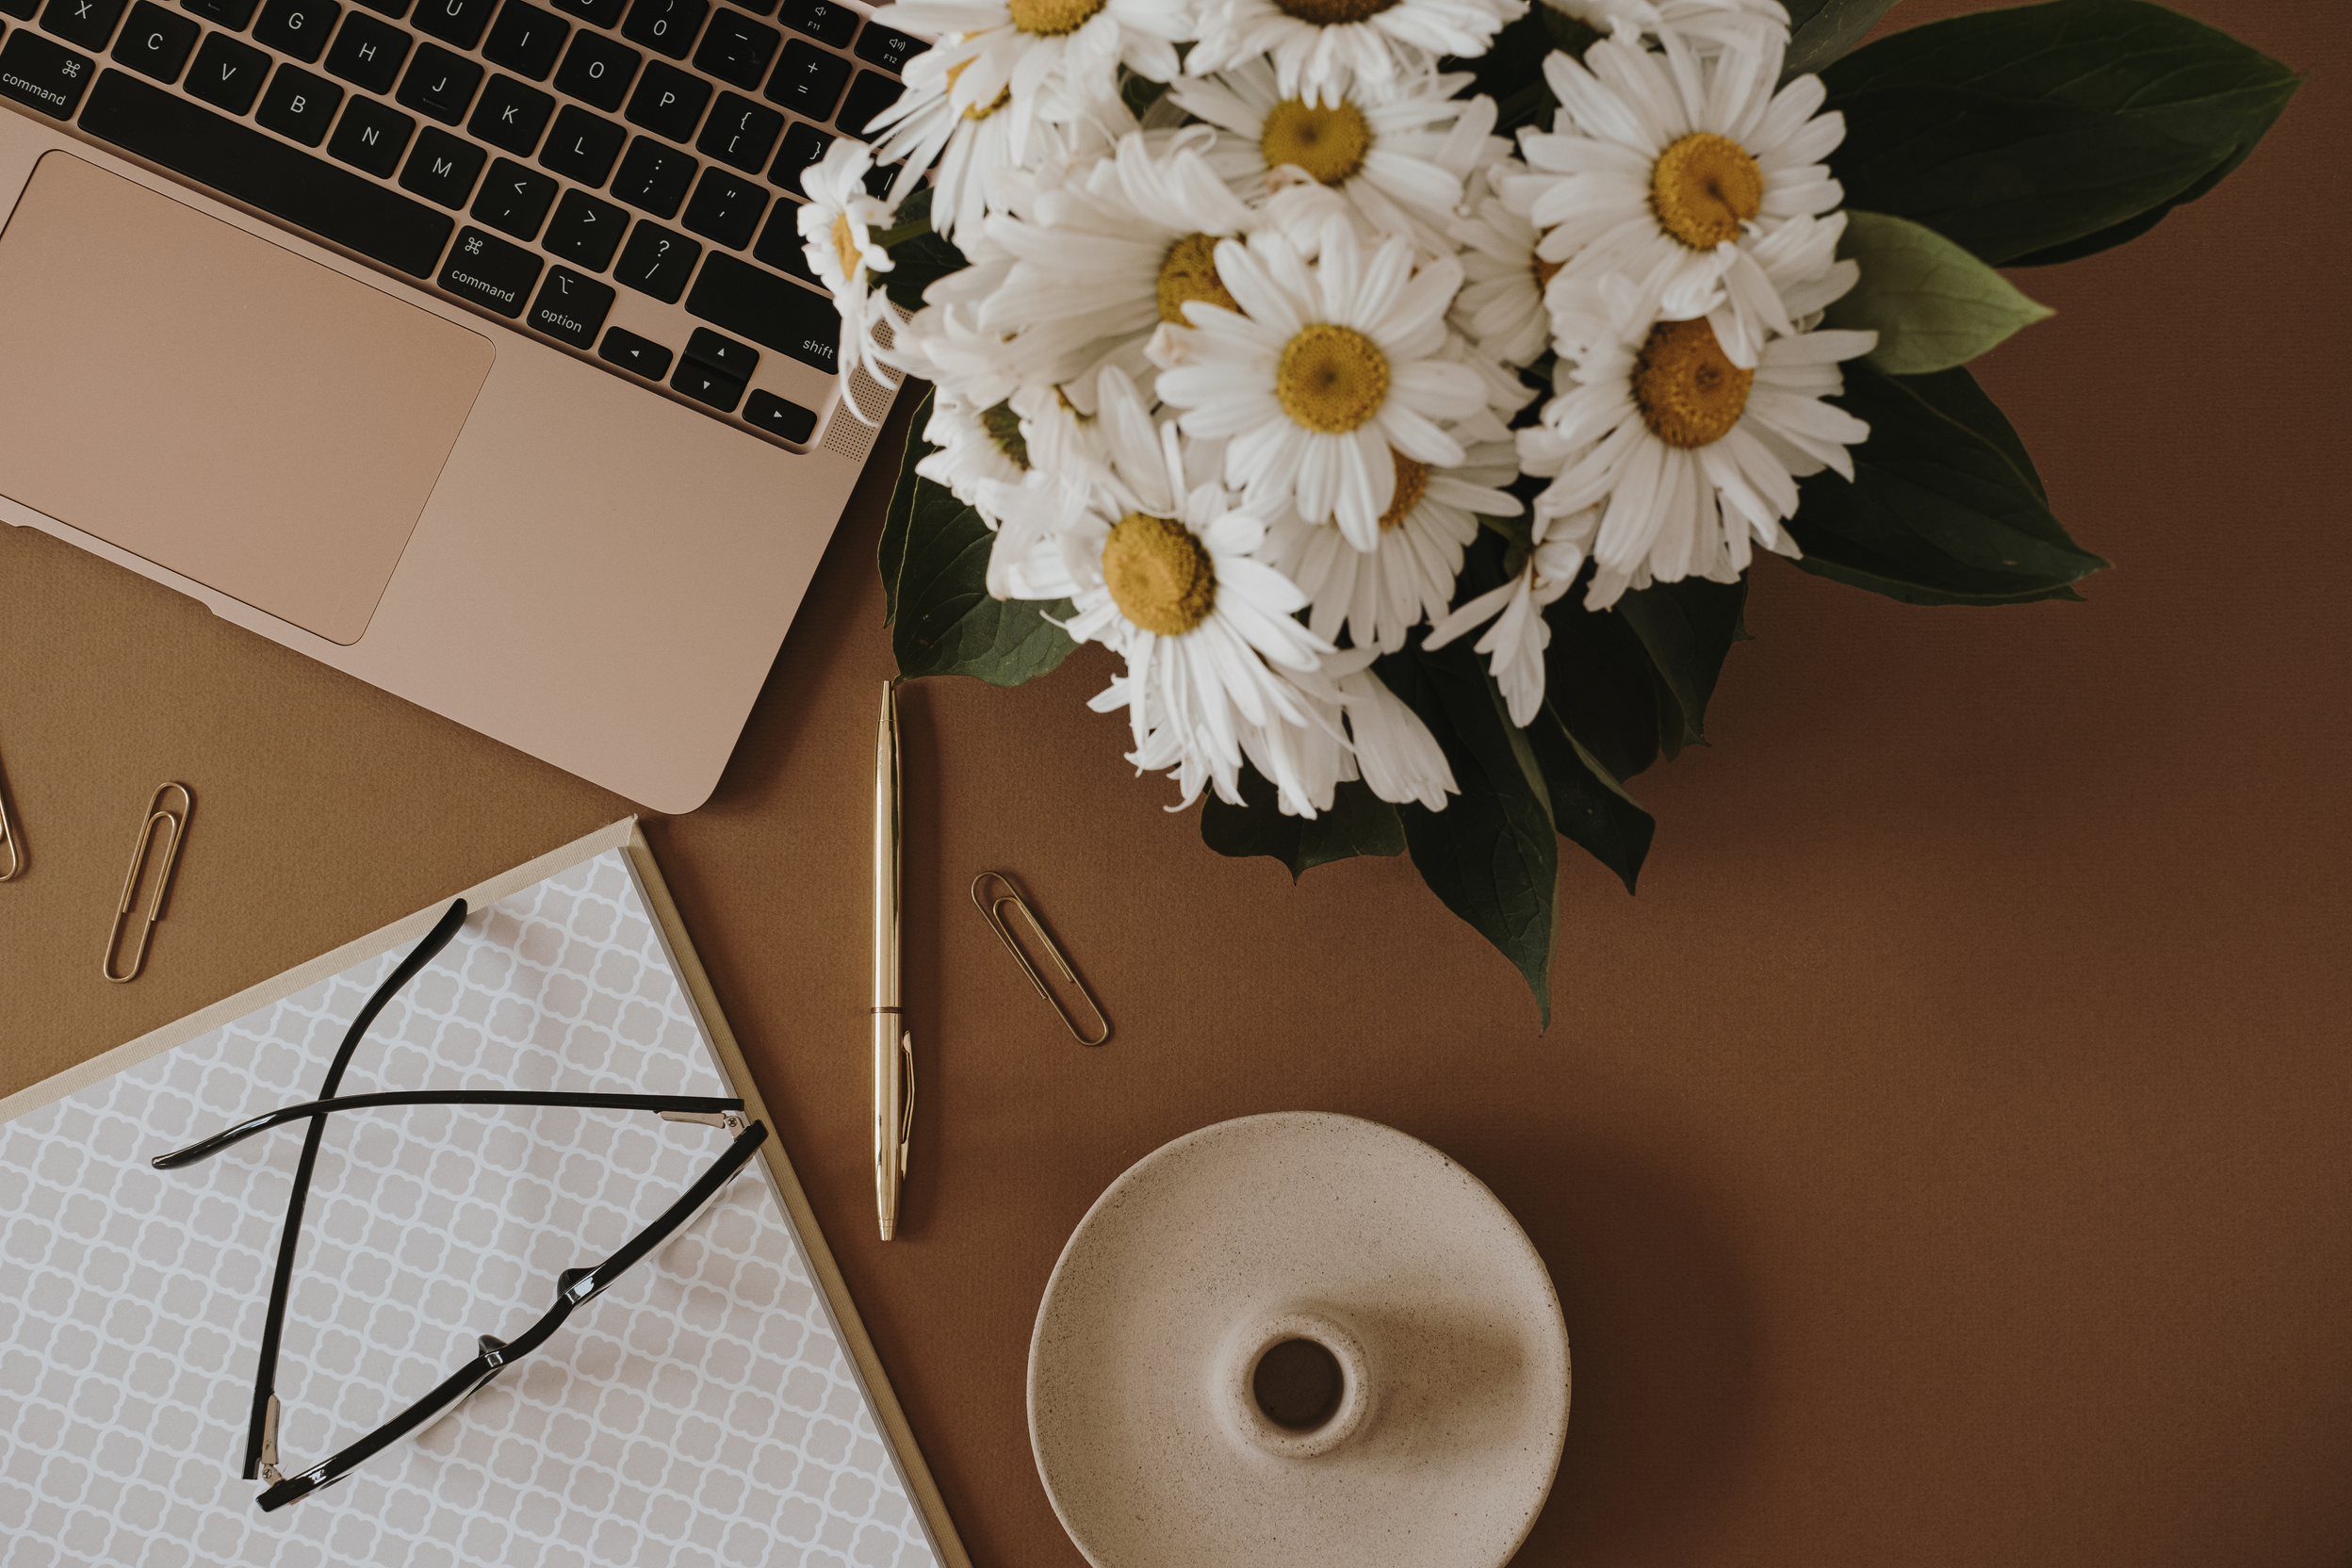 Laptop, Notebook, Eyeglasses, Vase, Pen, Clips, and Flowers